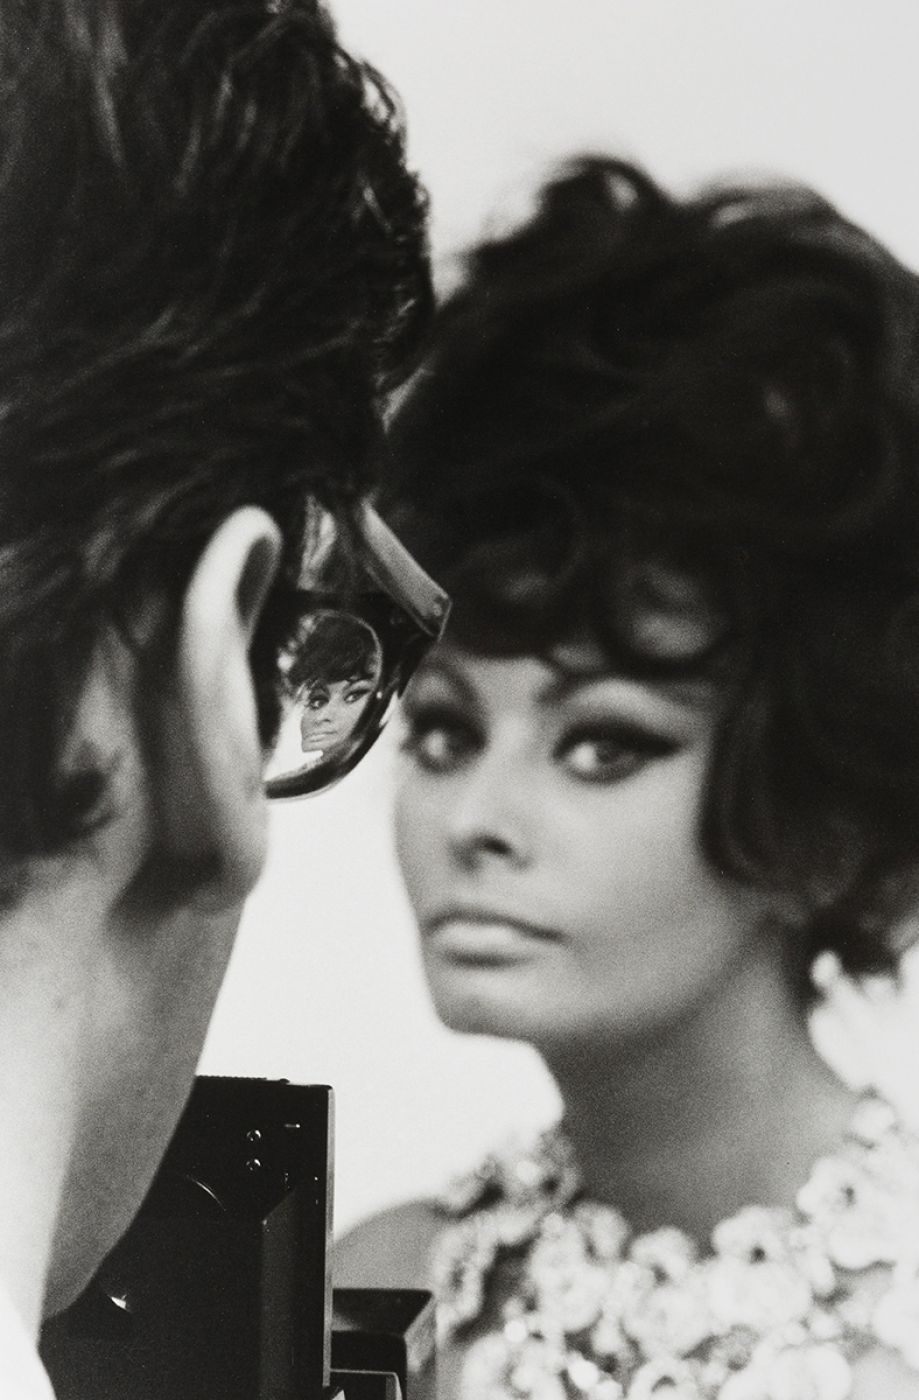 Tazio Secchiaroli, “Sophia Loren fotografata da Richard Avedon a Roma”, 1966